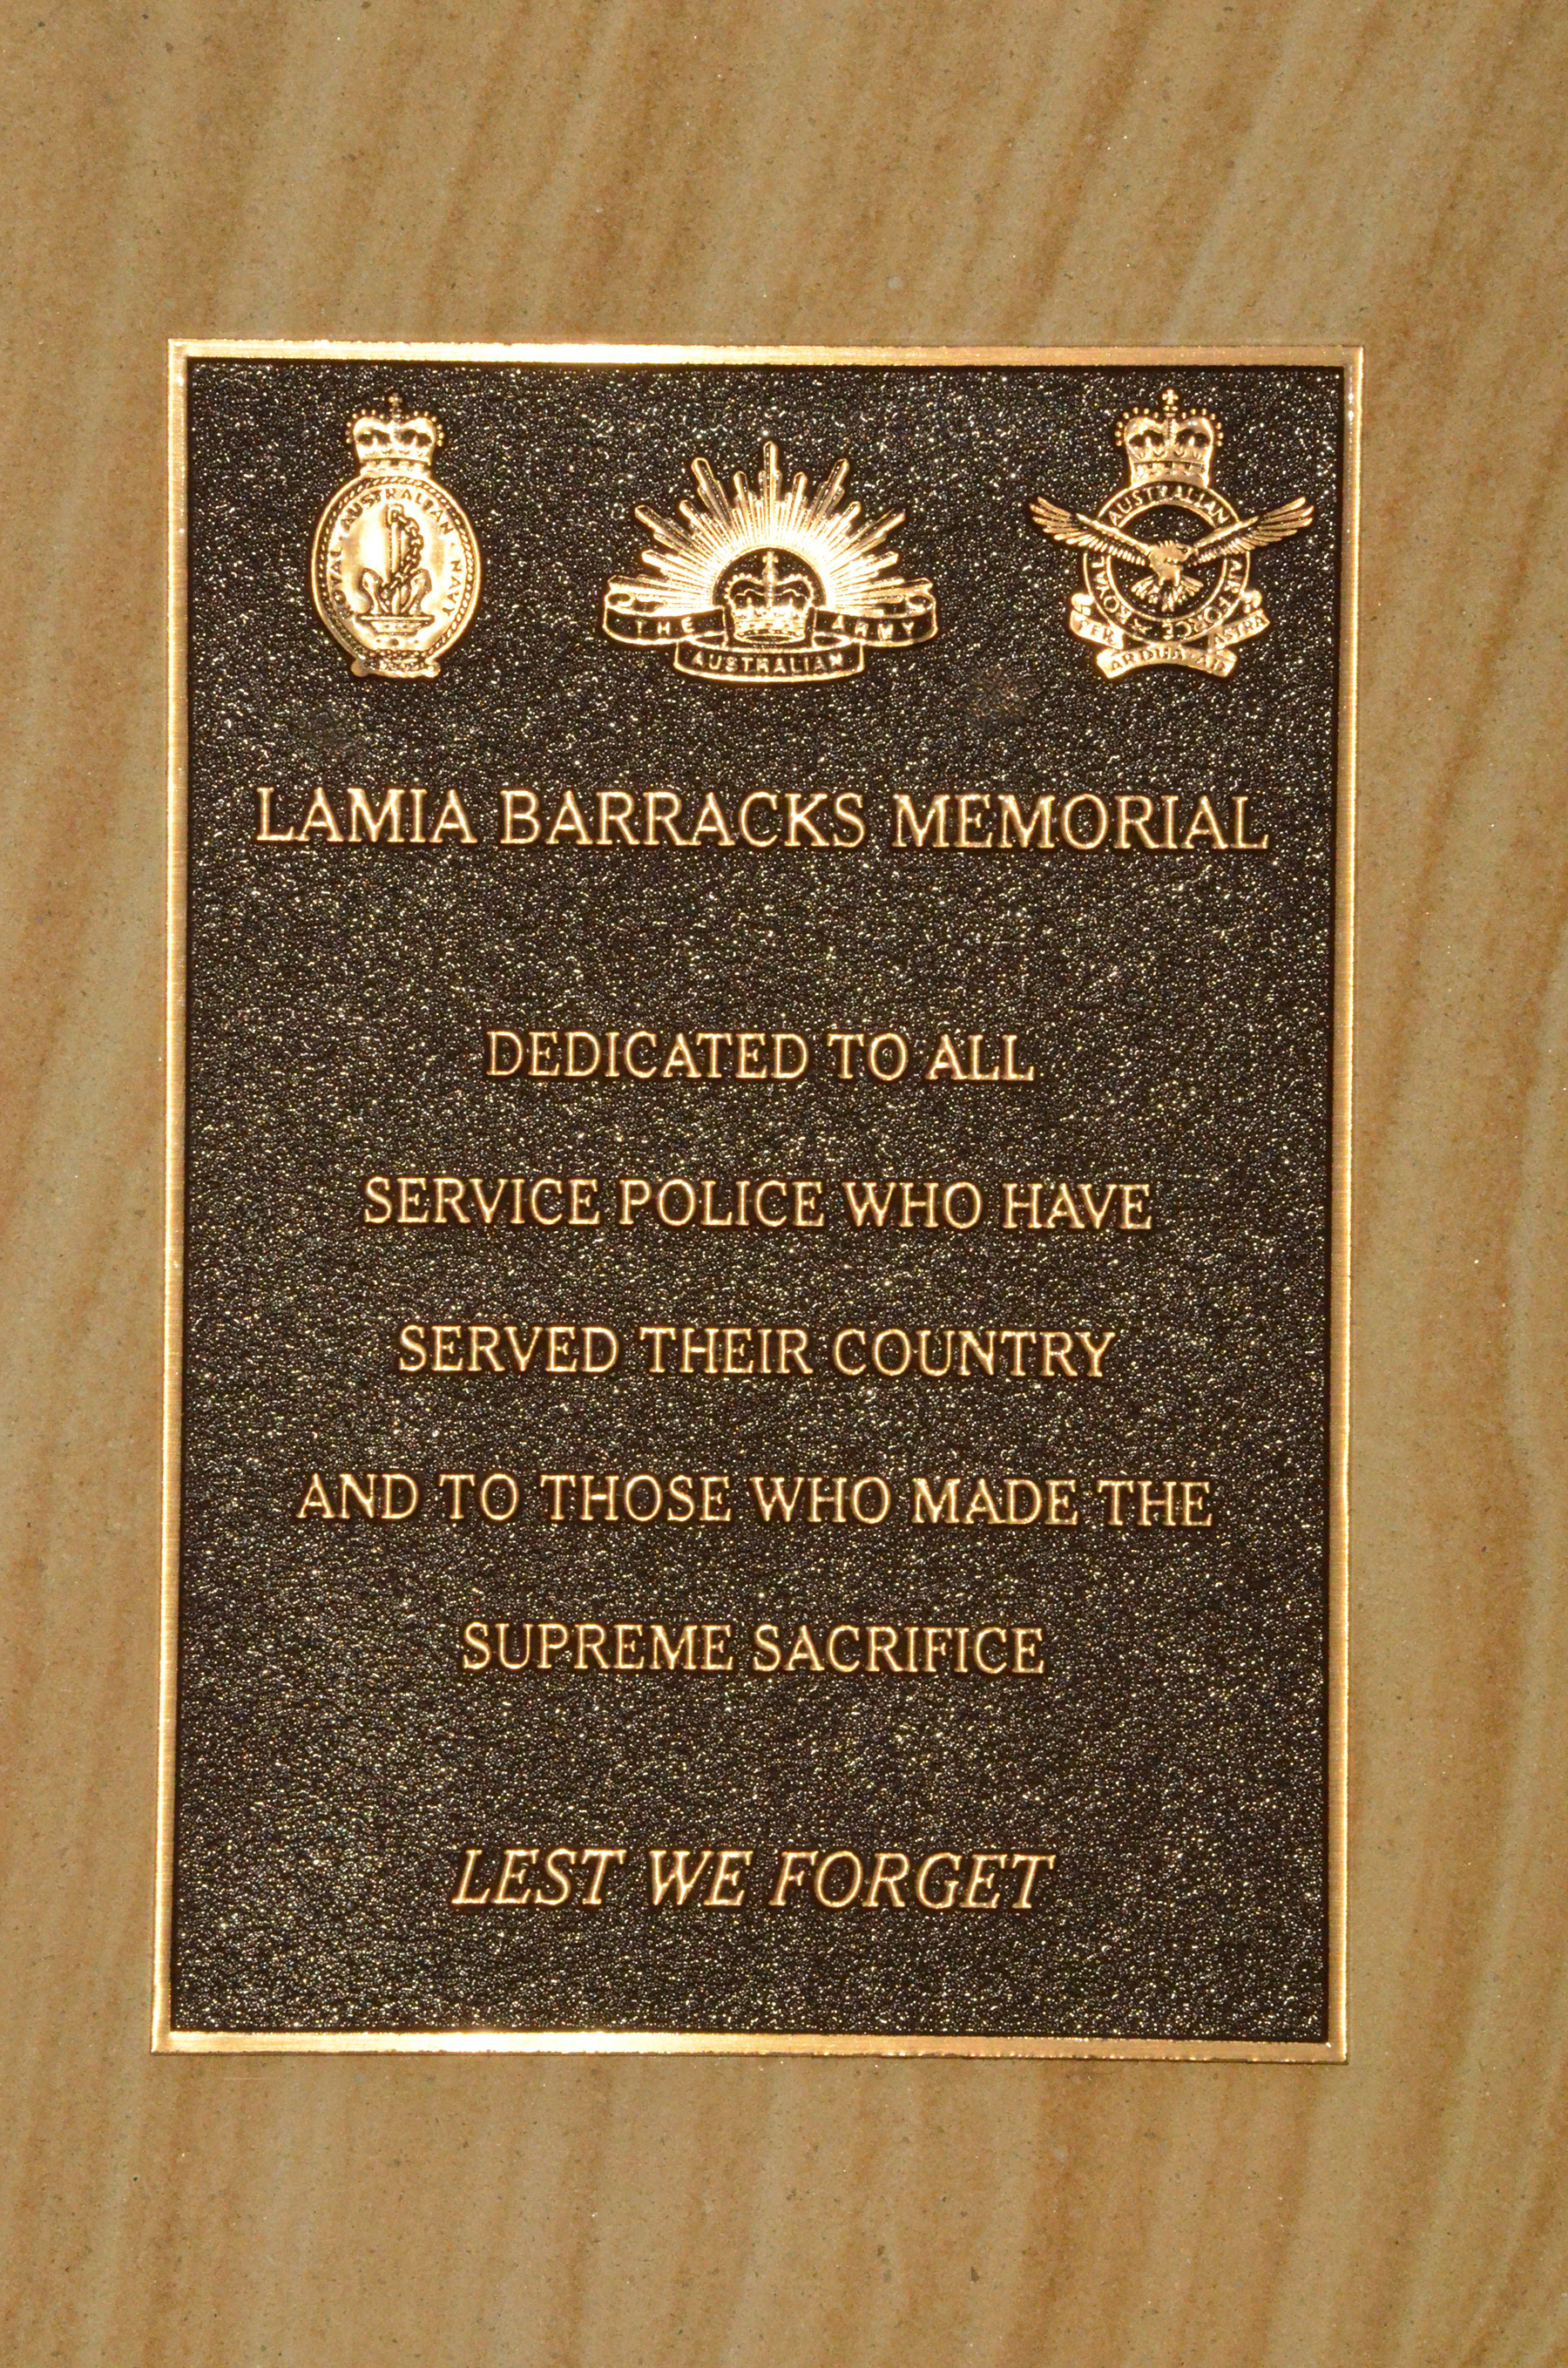 01 Lamia Barracks Memorial Plaque